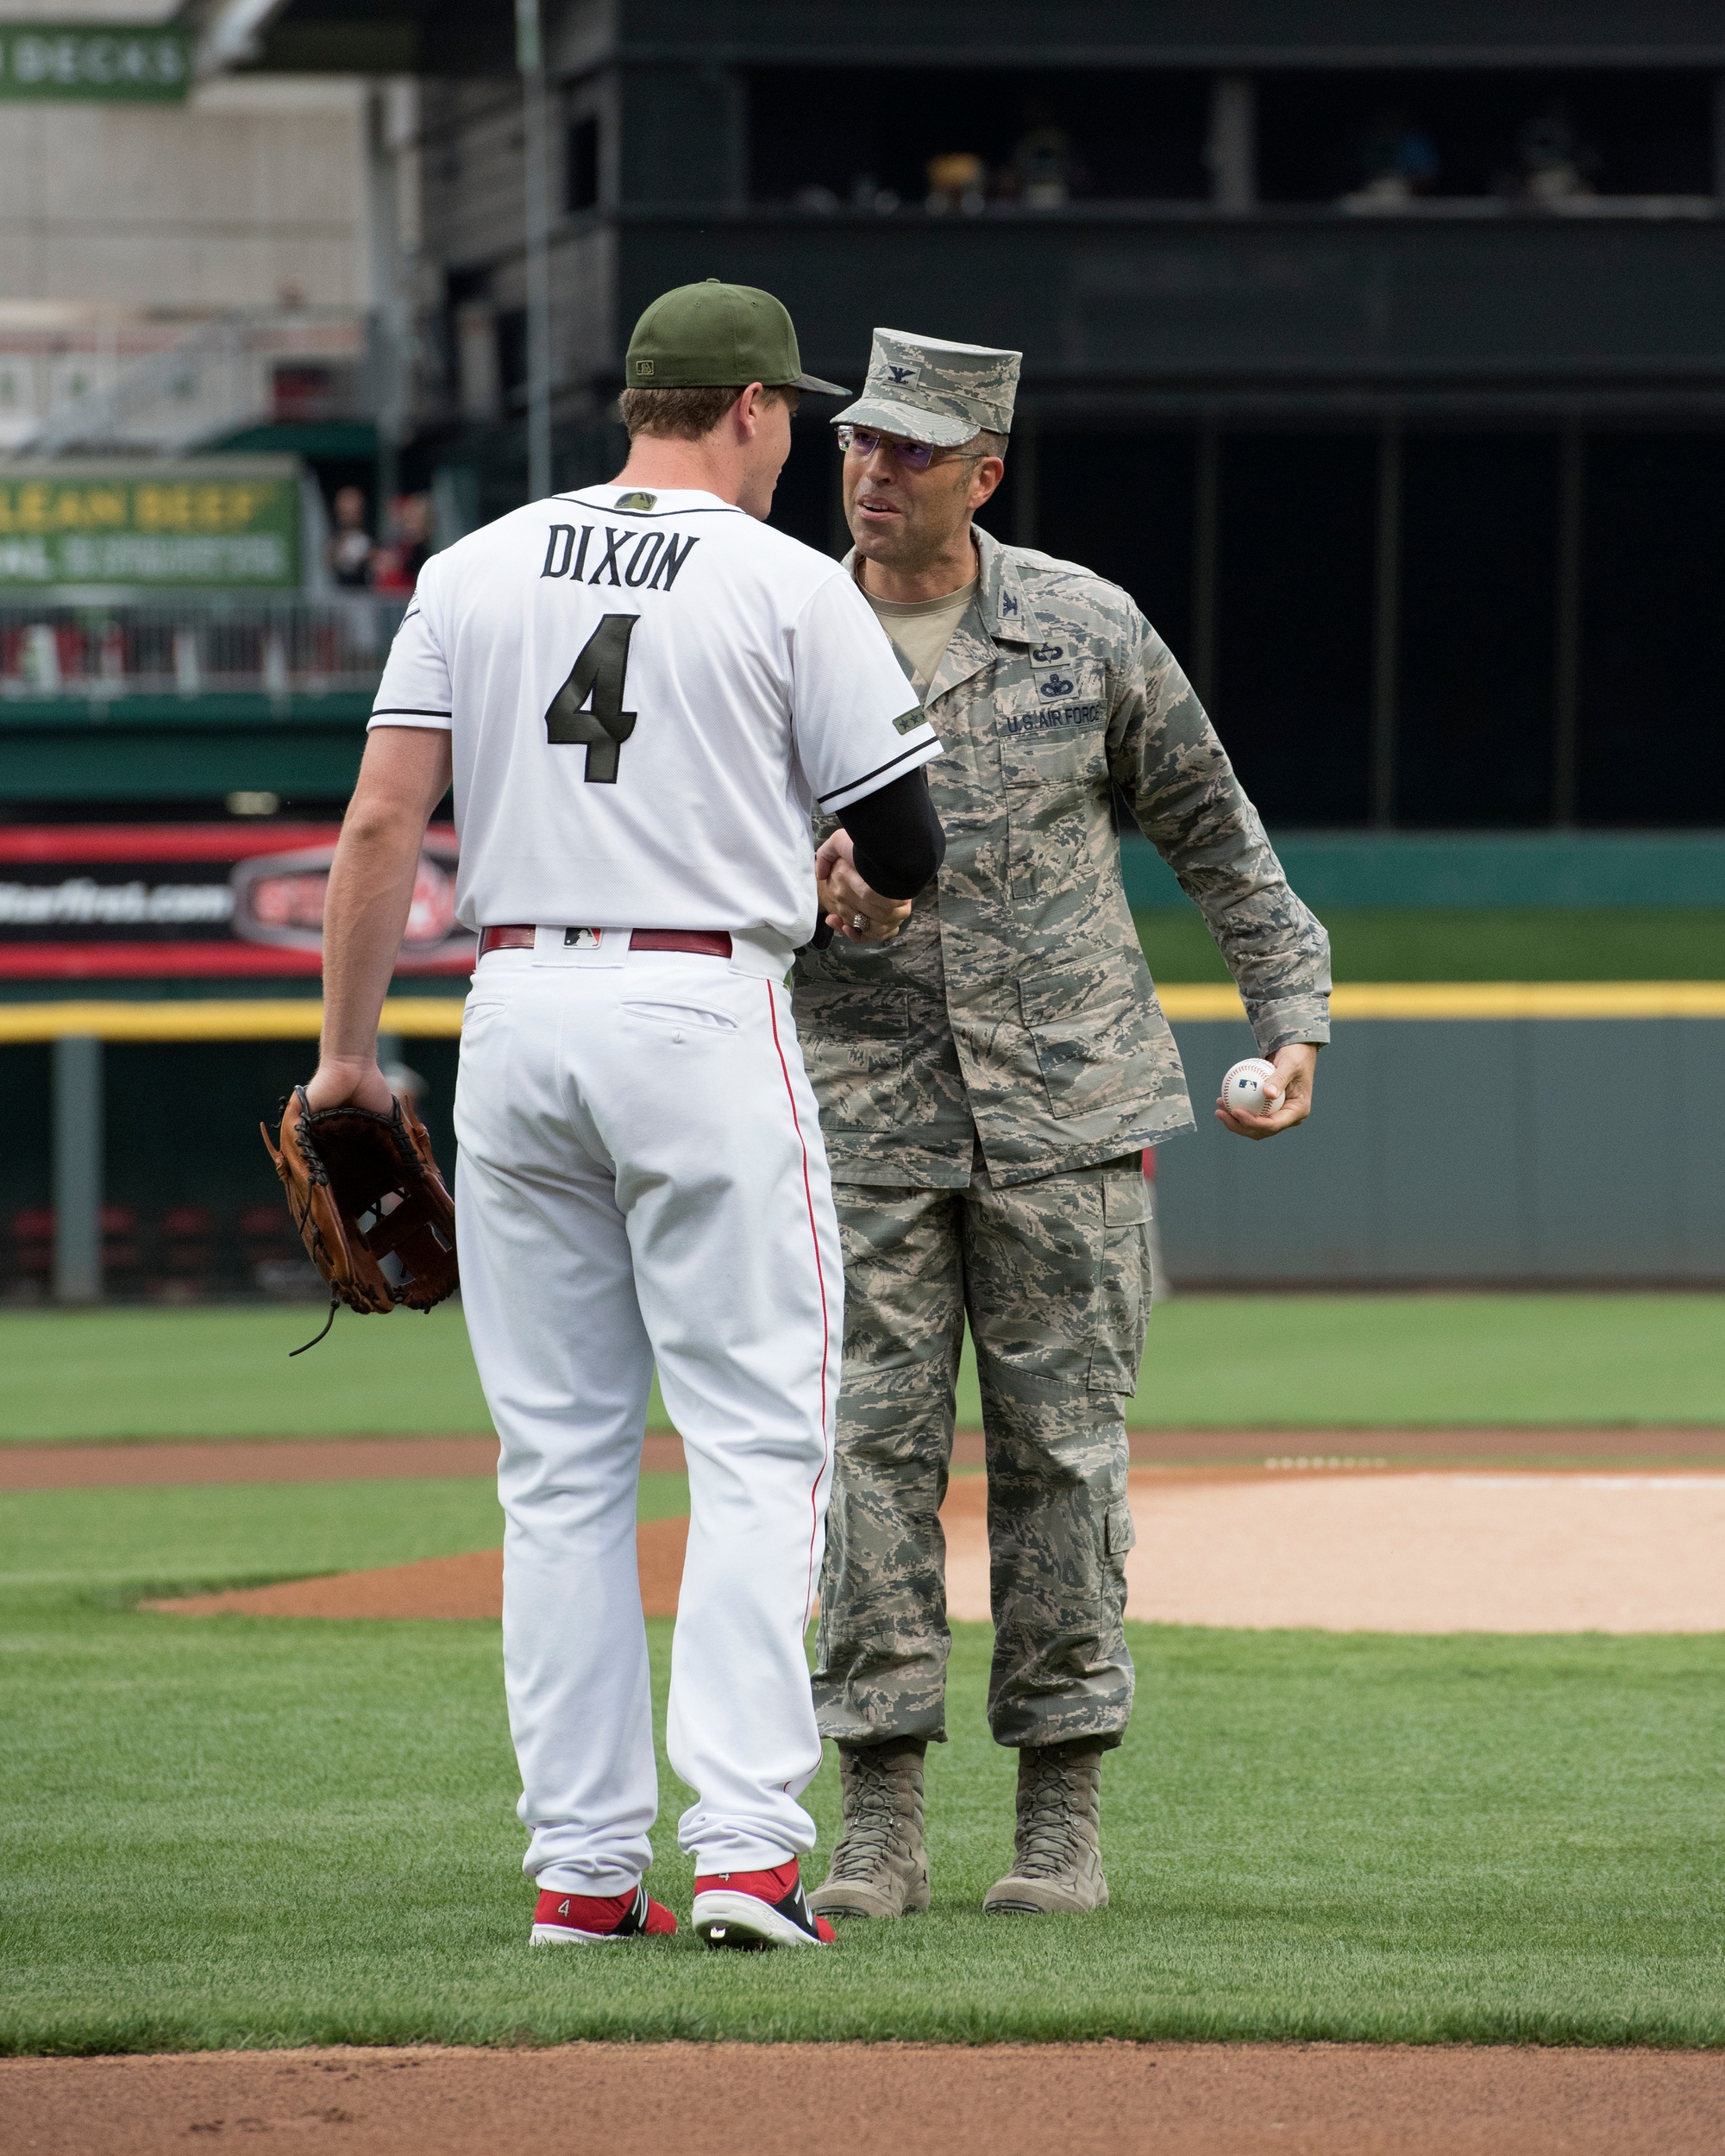 DVIDS - Images - Cincinnati Reds baseball team recognize military